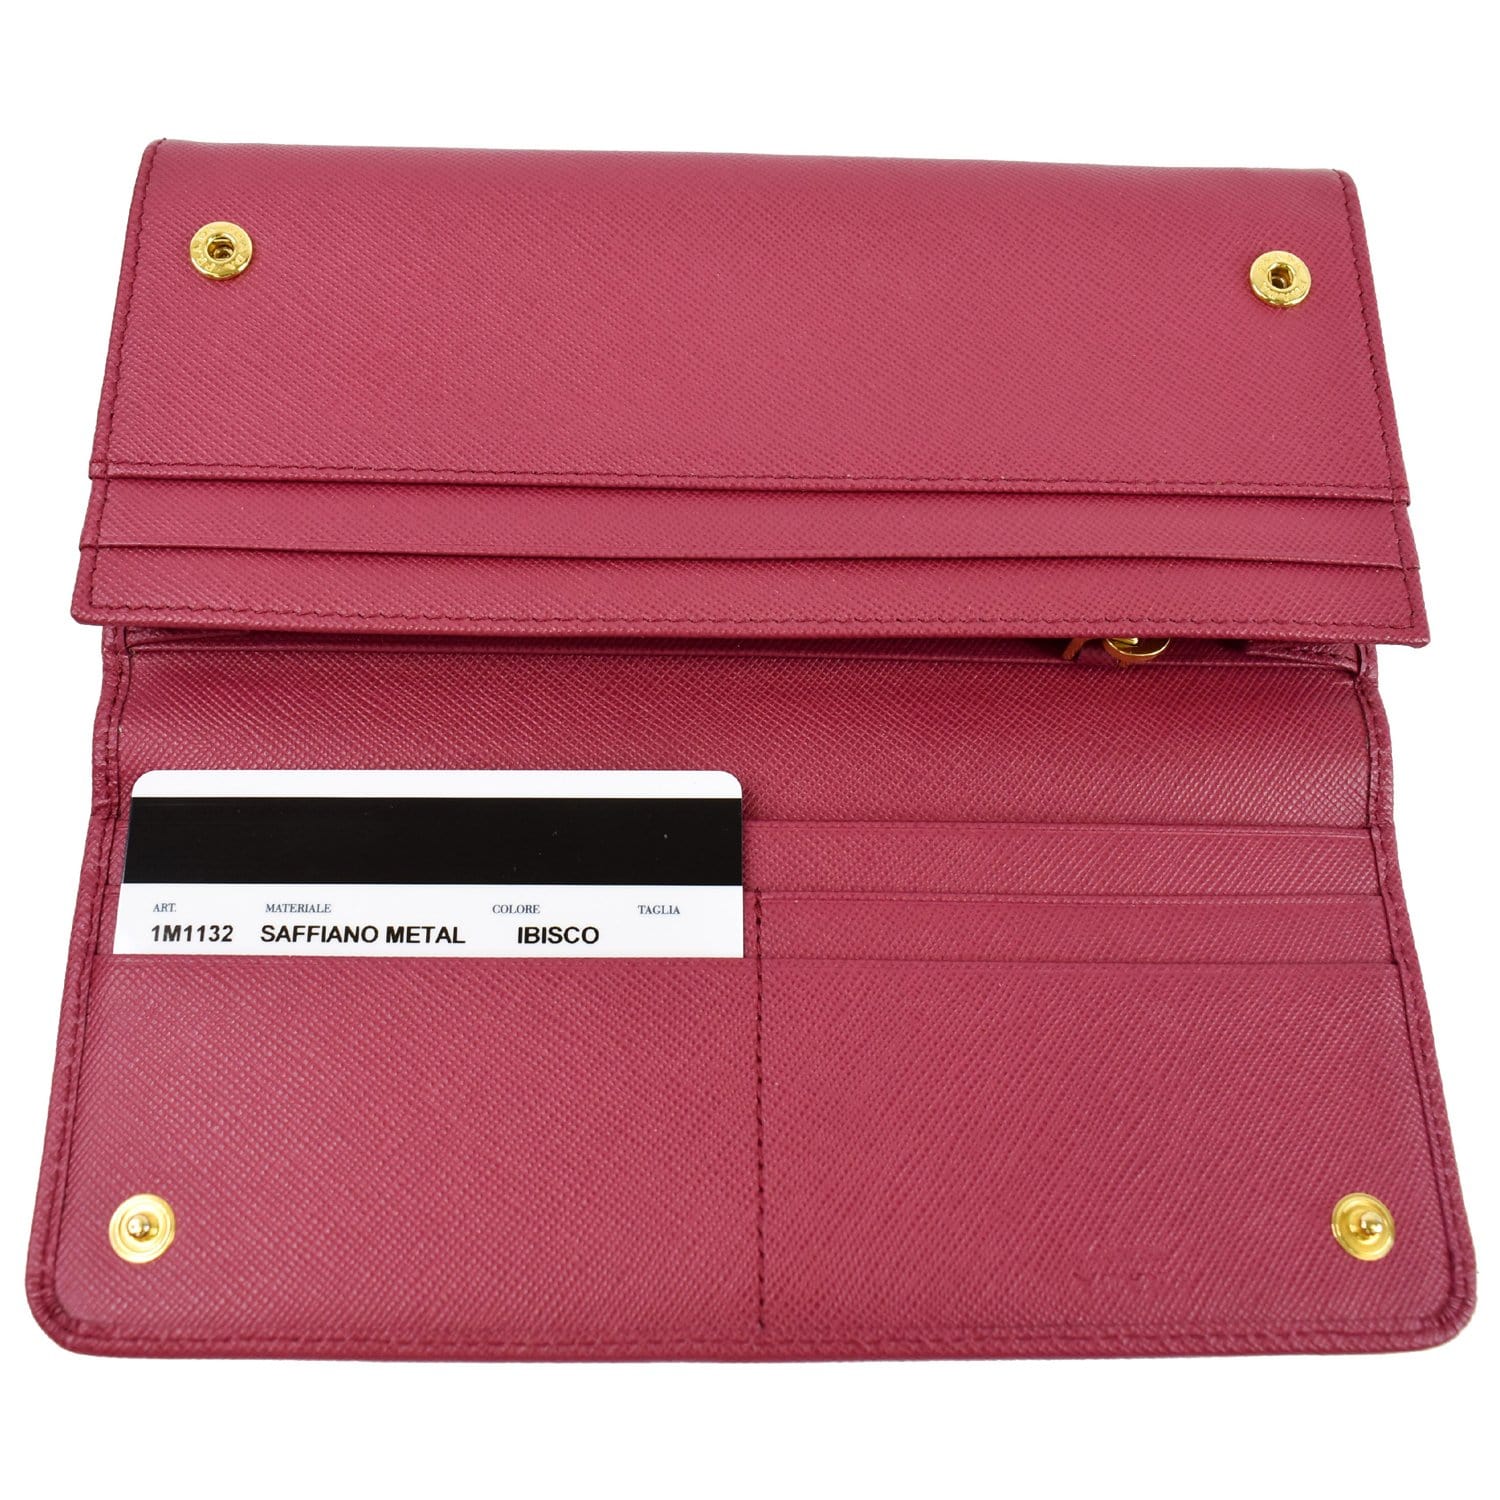 A6 Lizard Leather Binder Wallet Pink